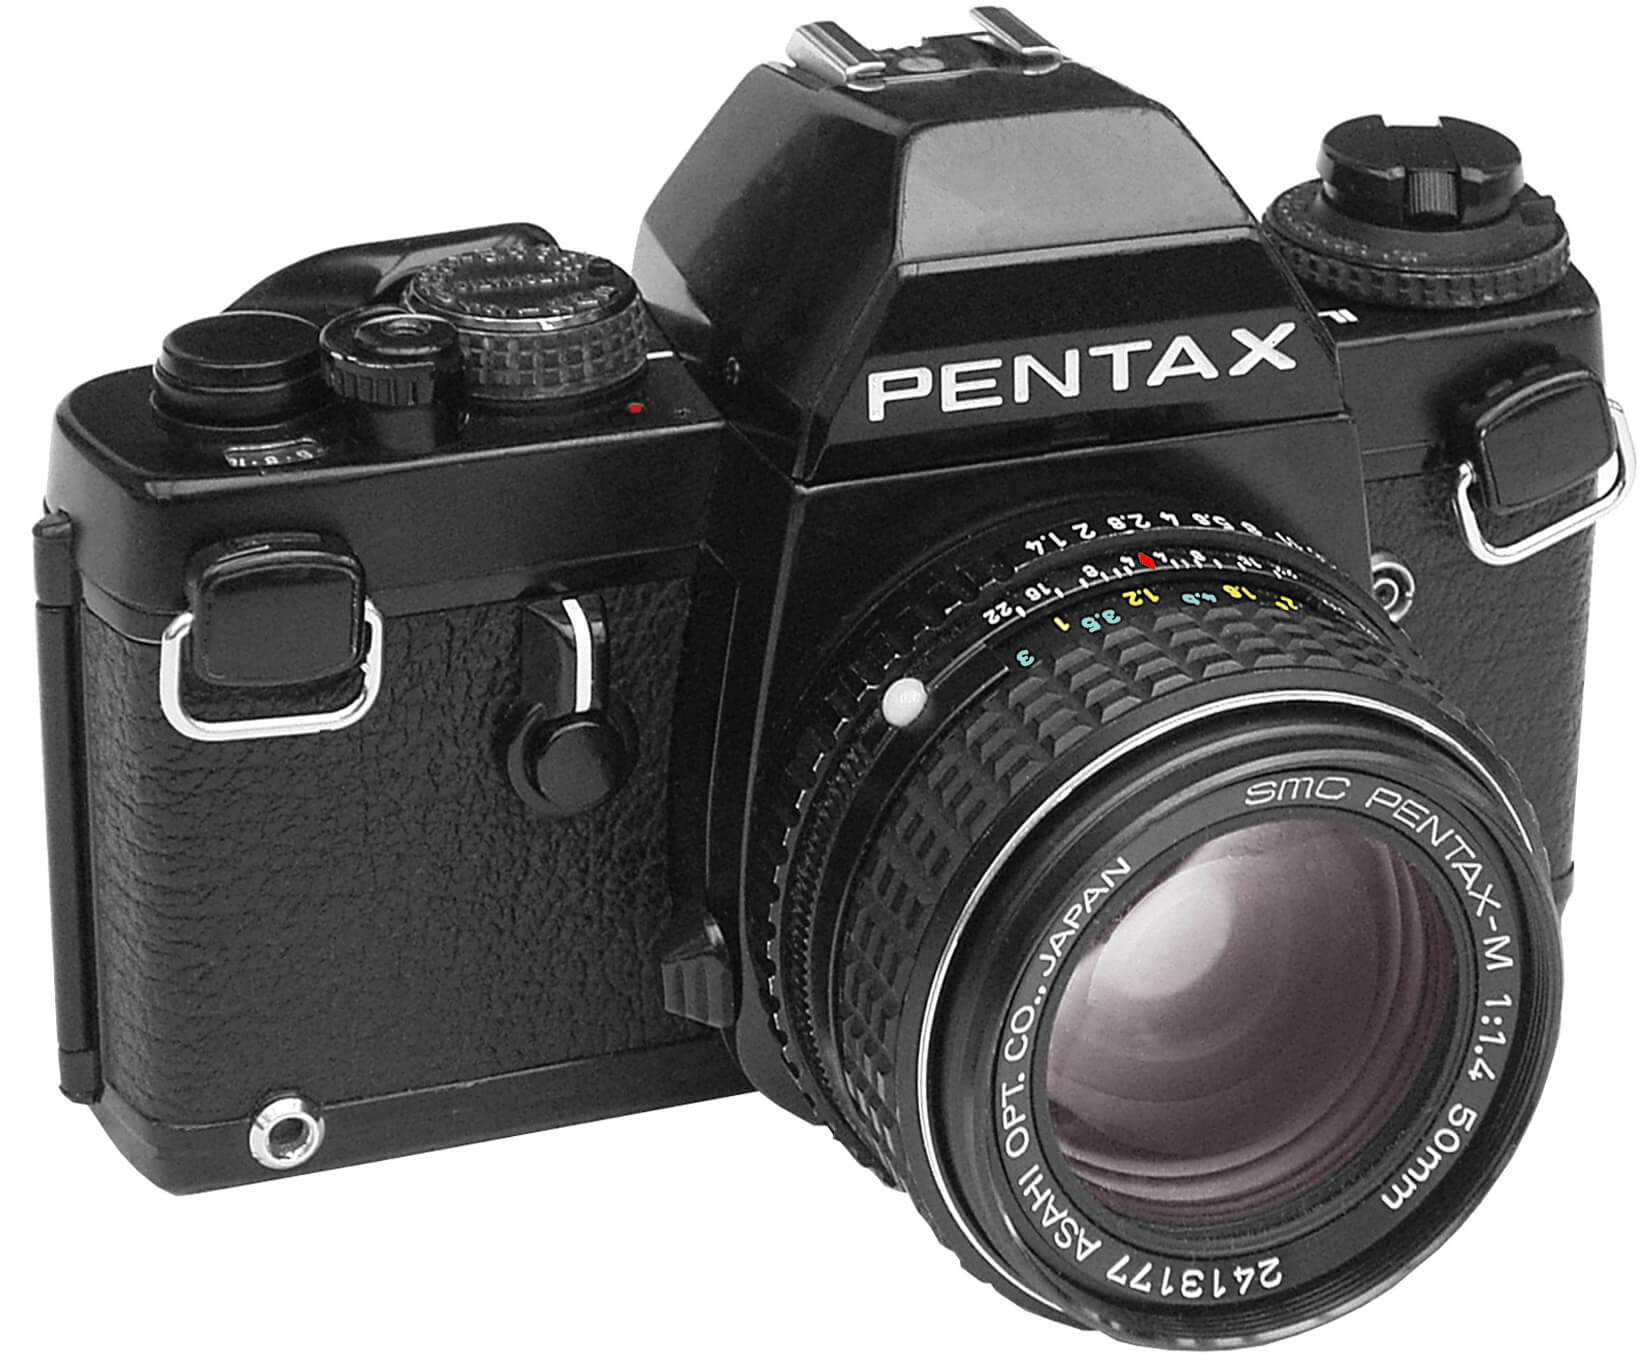 New Pentax film camera